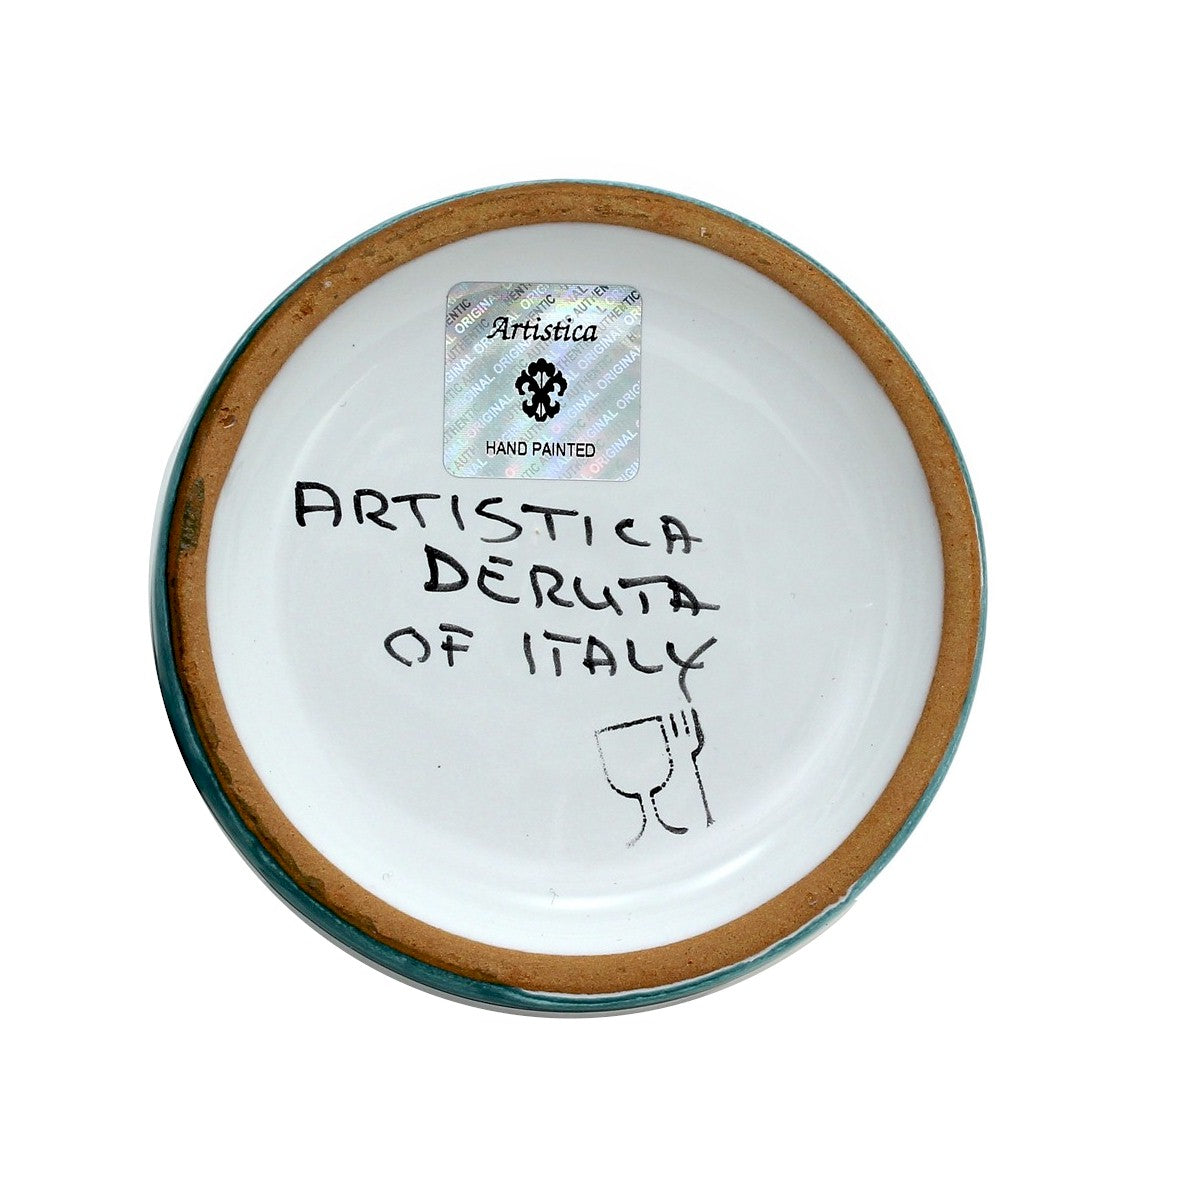 GIFT BOX: With authentic Deruta hand painted ceramic - Gravy Sauce Boat Ricco Deruta Design